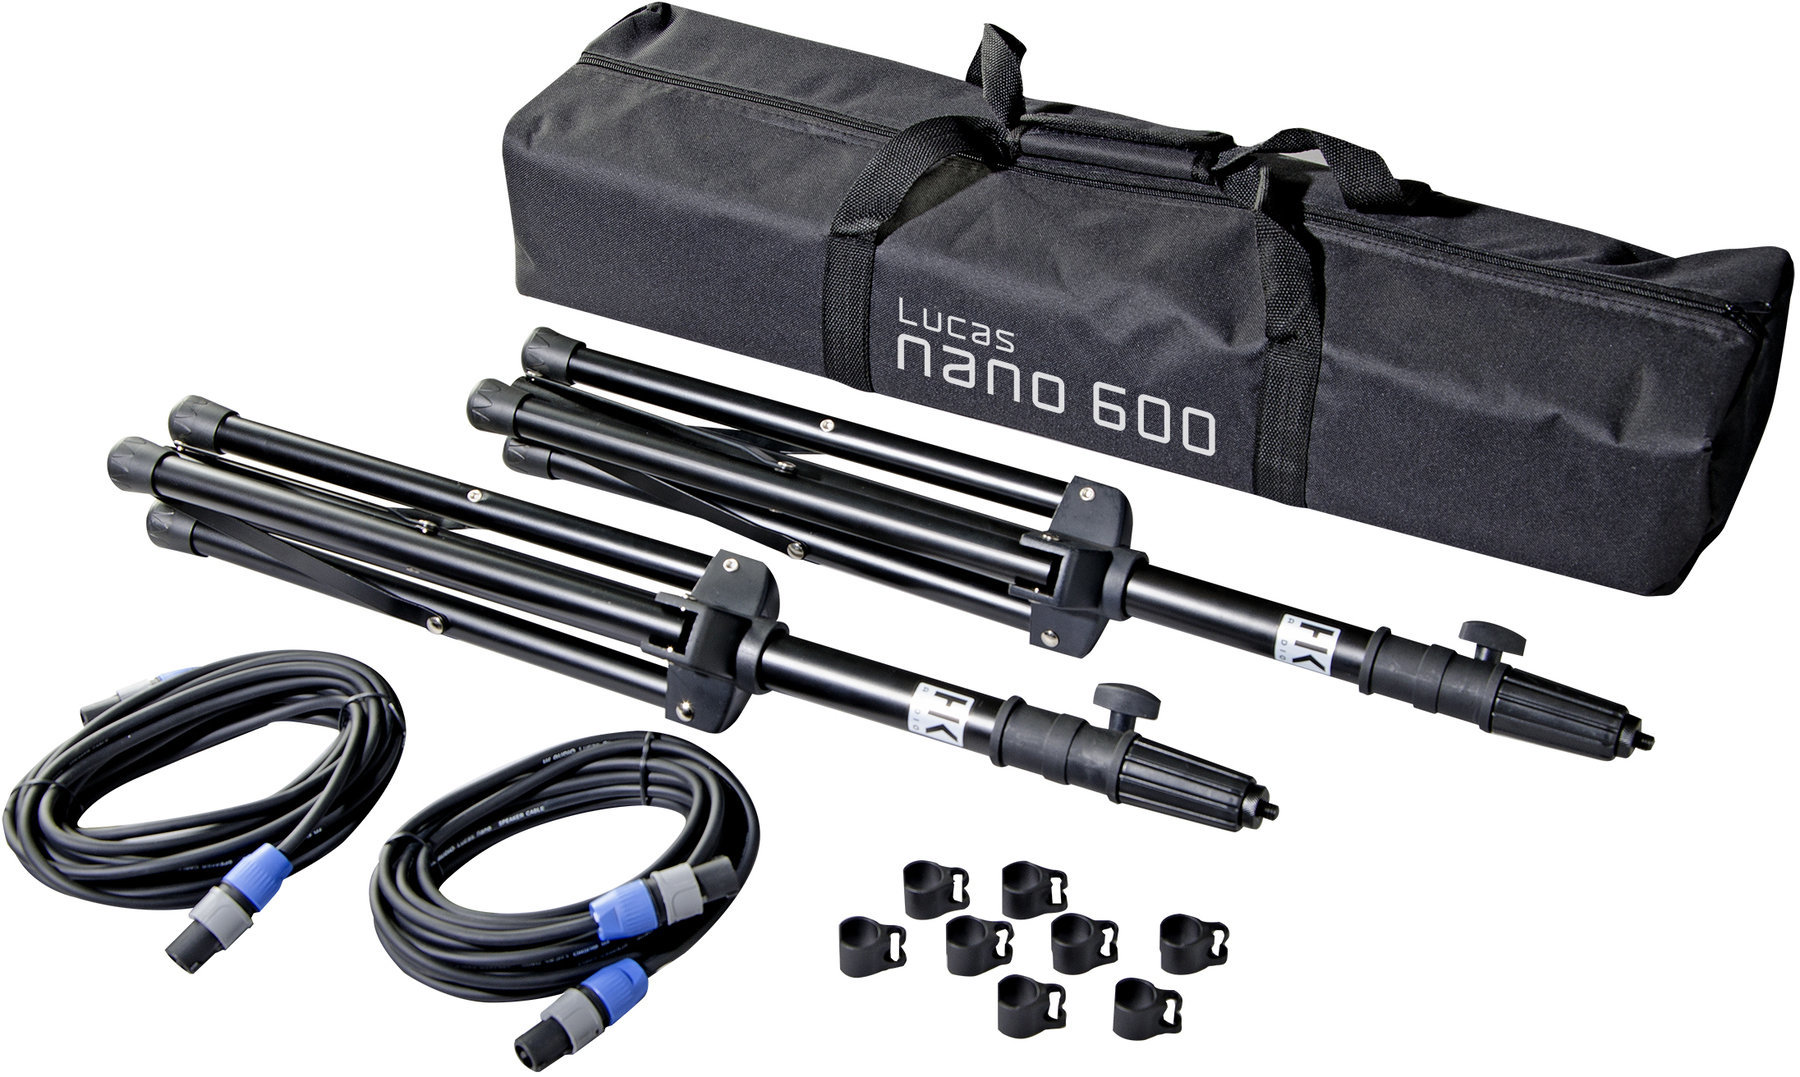 Teleskopstange HK Audio L.U.C.A.S. NANO 600 Stereo Stand Add On